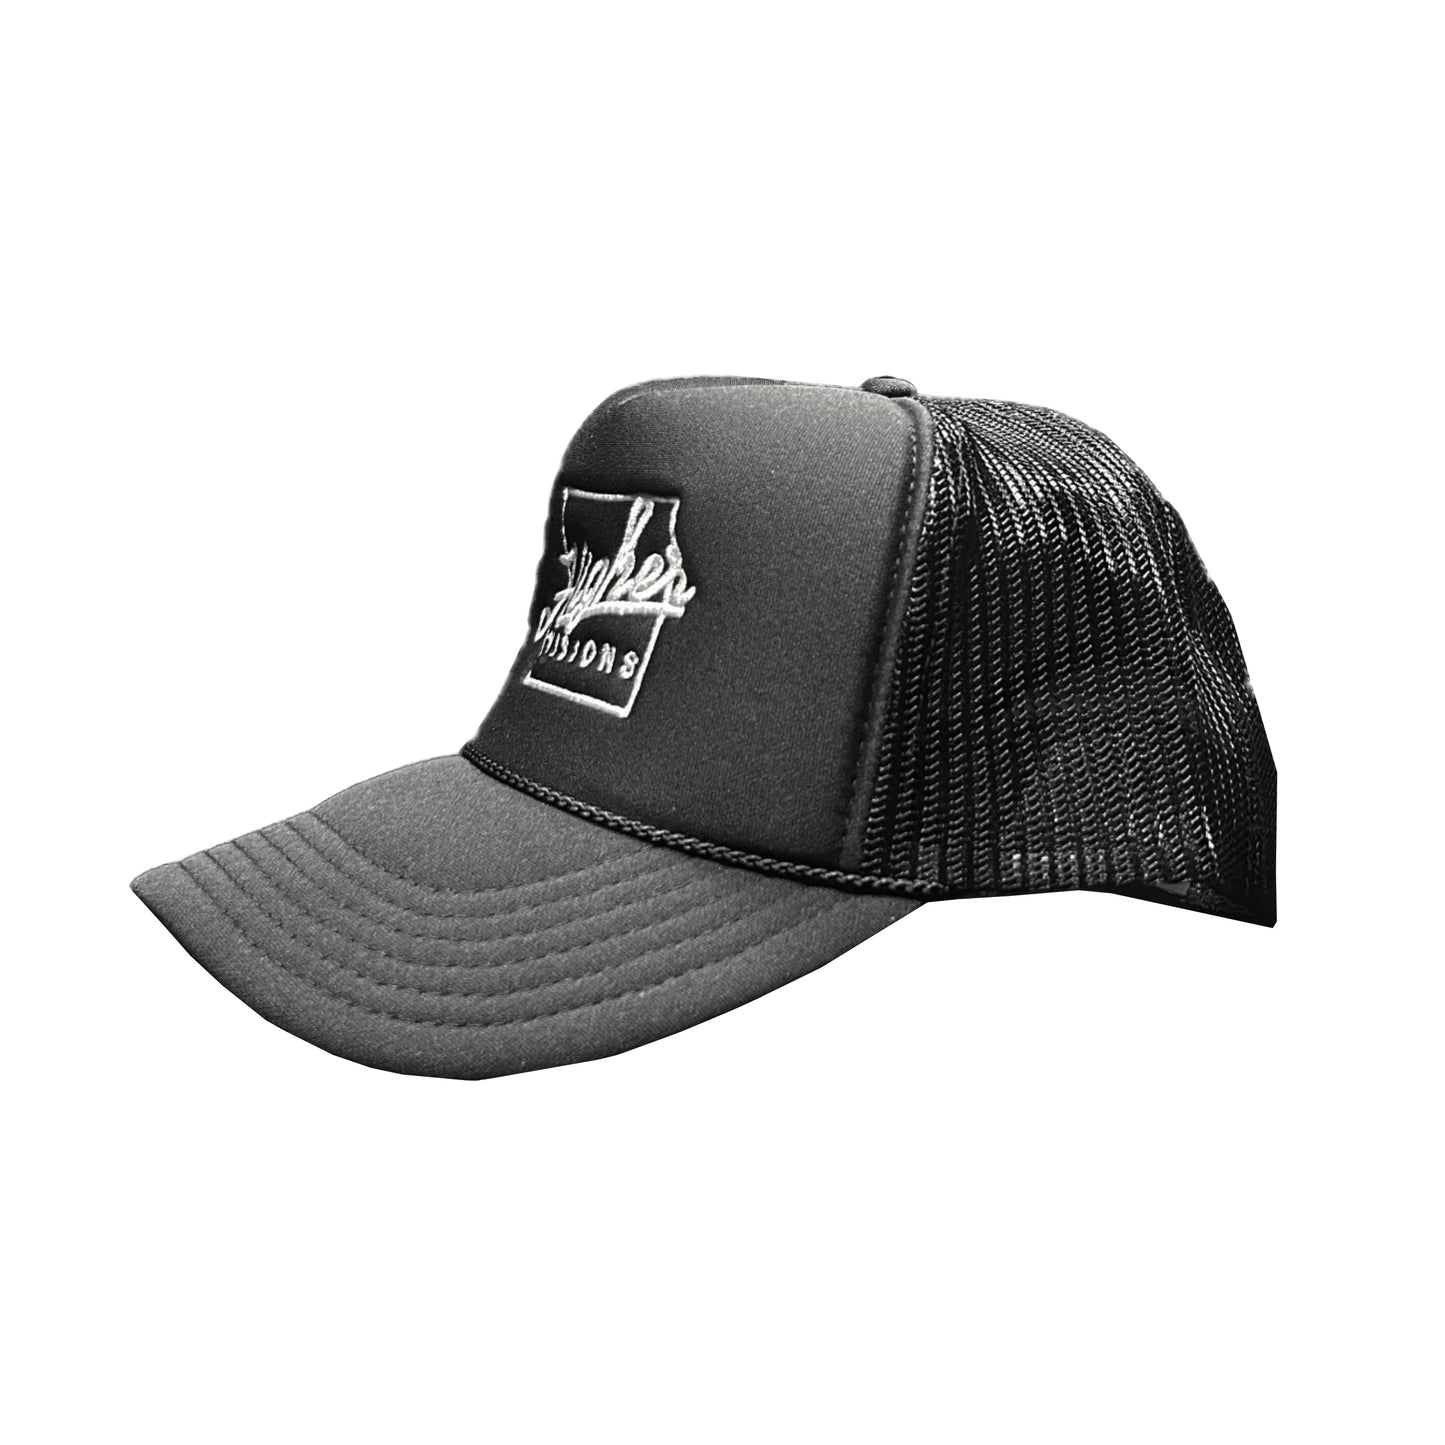 Black Trucker hat